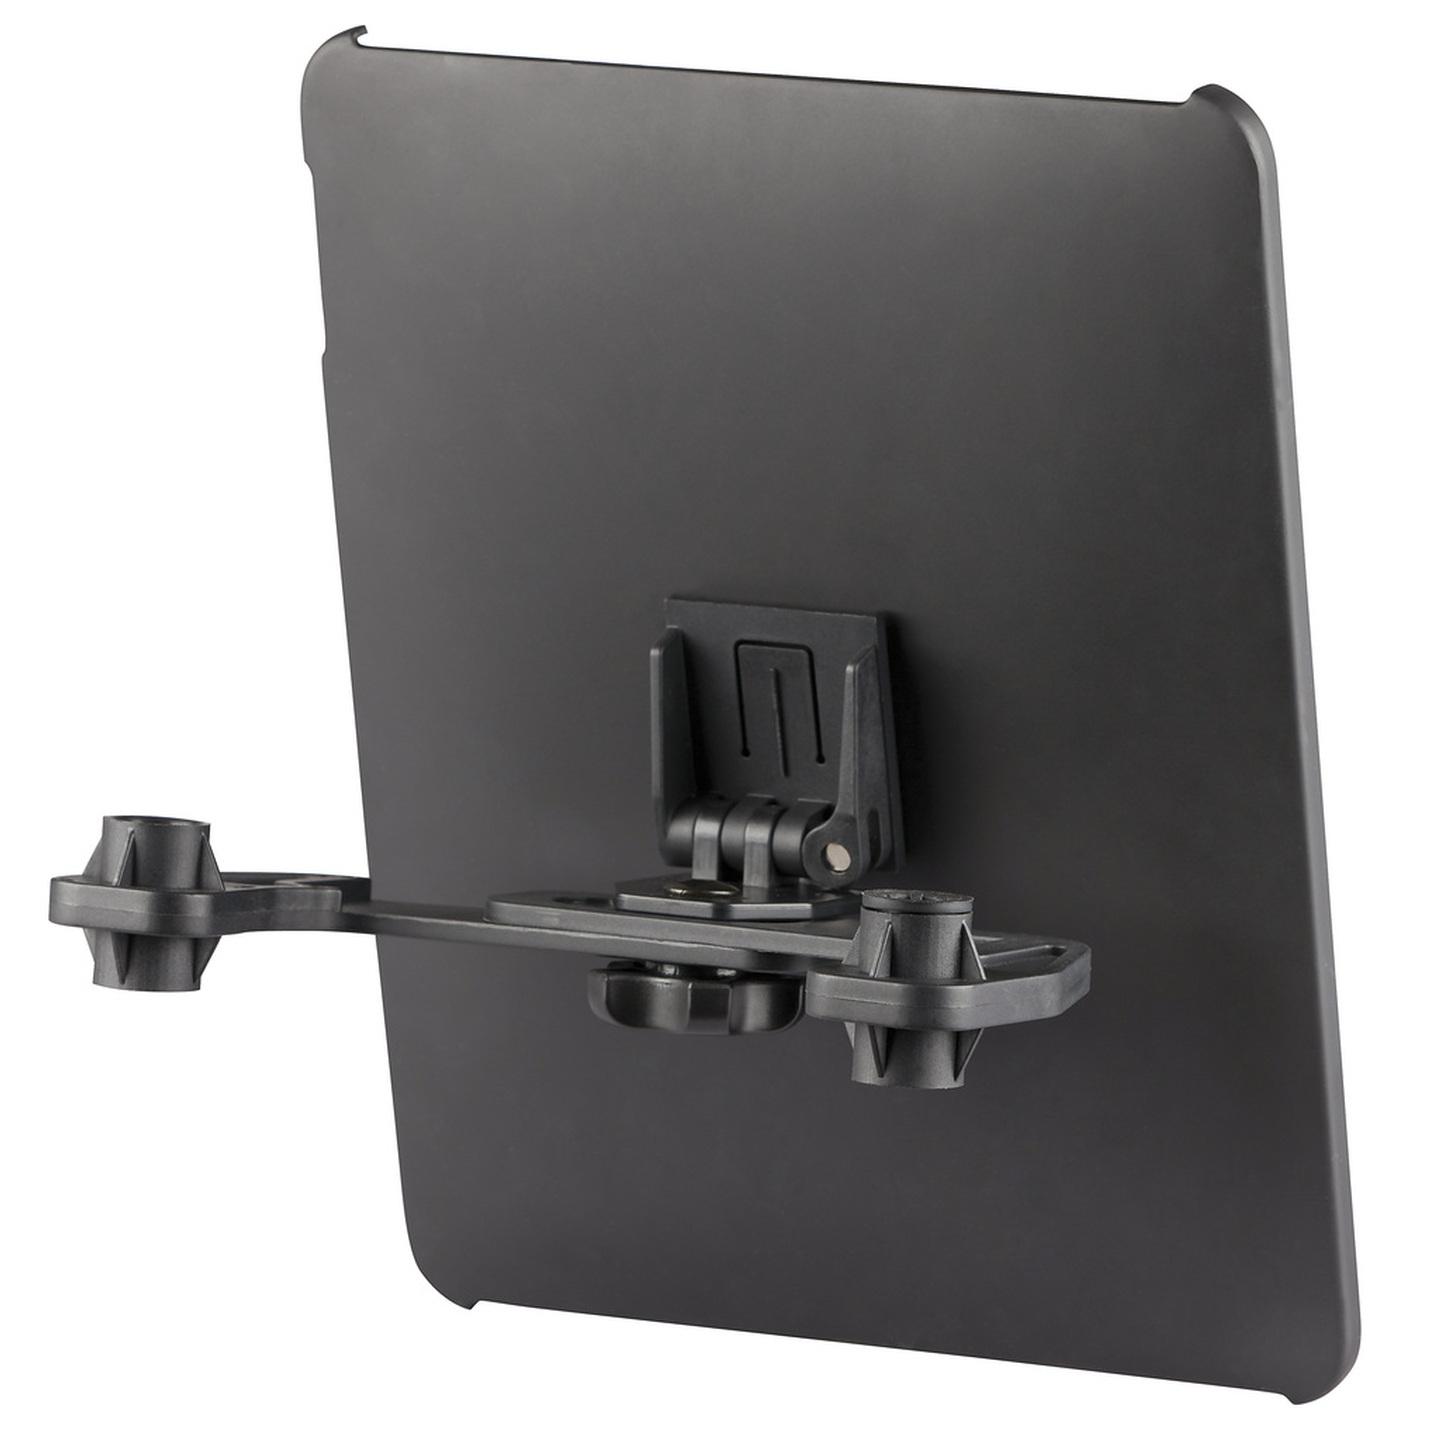 Headrest Mounting Bracket for iPad 2